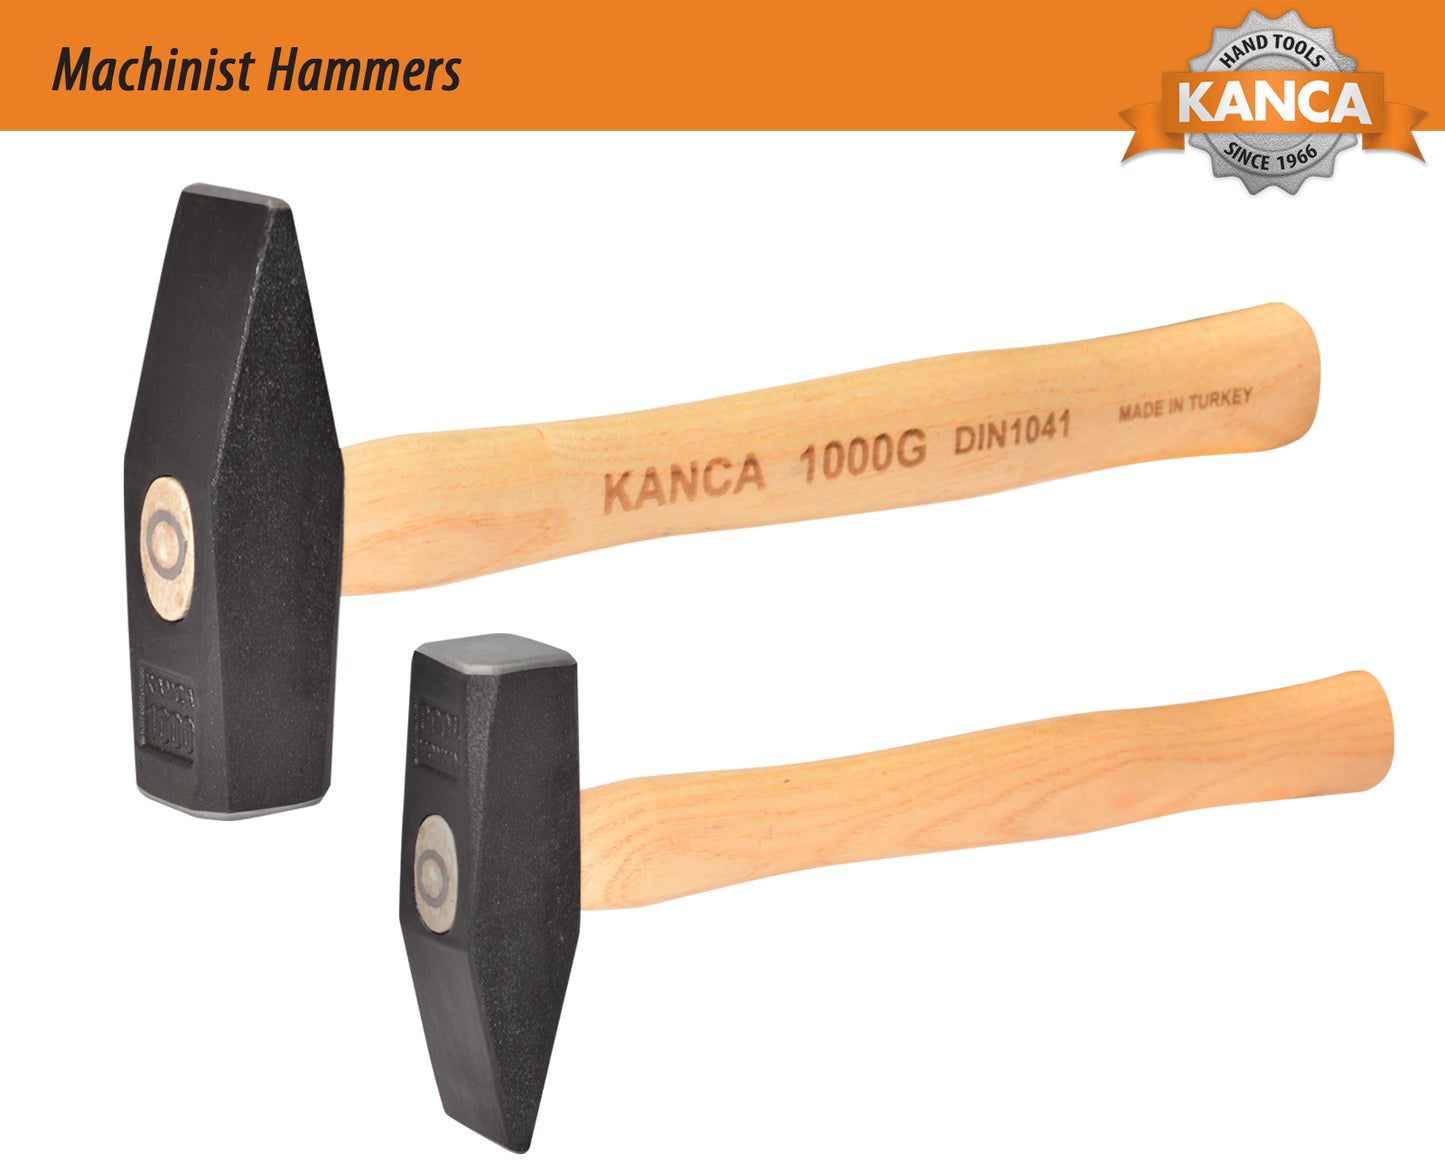 KANCA HAM-200, Machinist Handle Hammer, Best Quality ash Wood Handle,